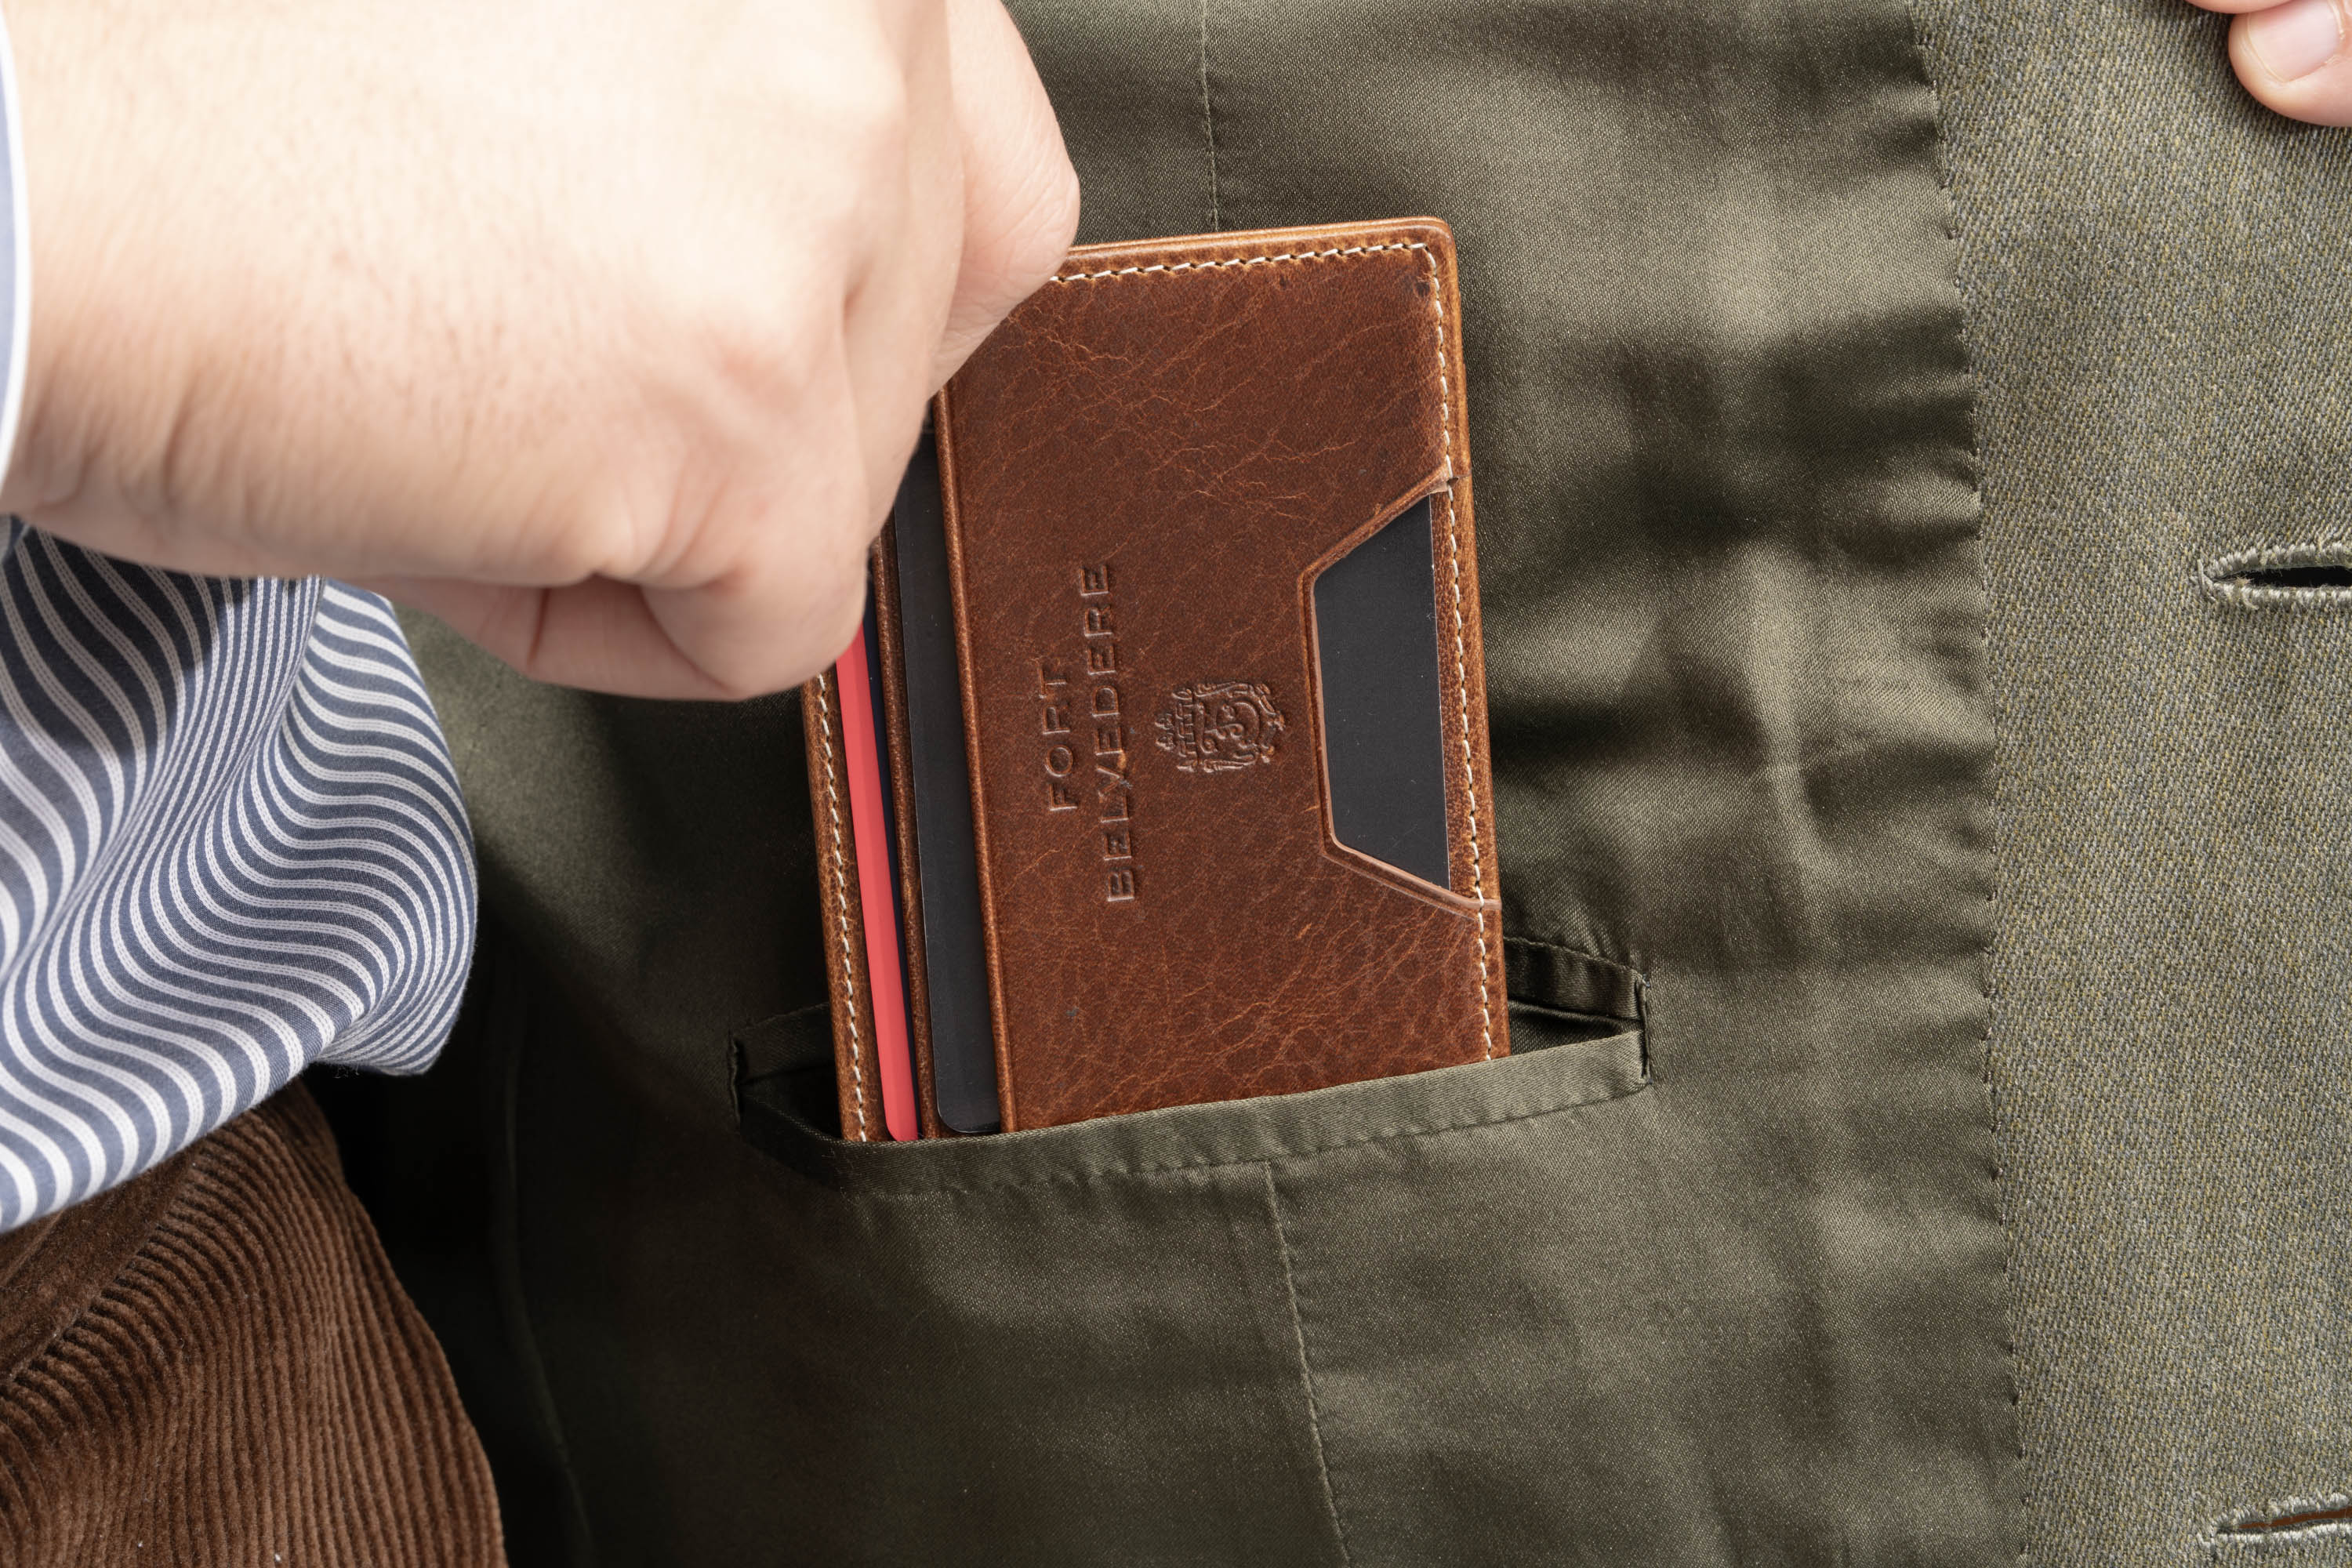 Slim Wallet - 4CC - Dumont Saddle Brown Full-Grain Leather has an ultra-slim profile. 